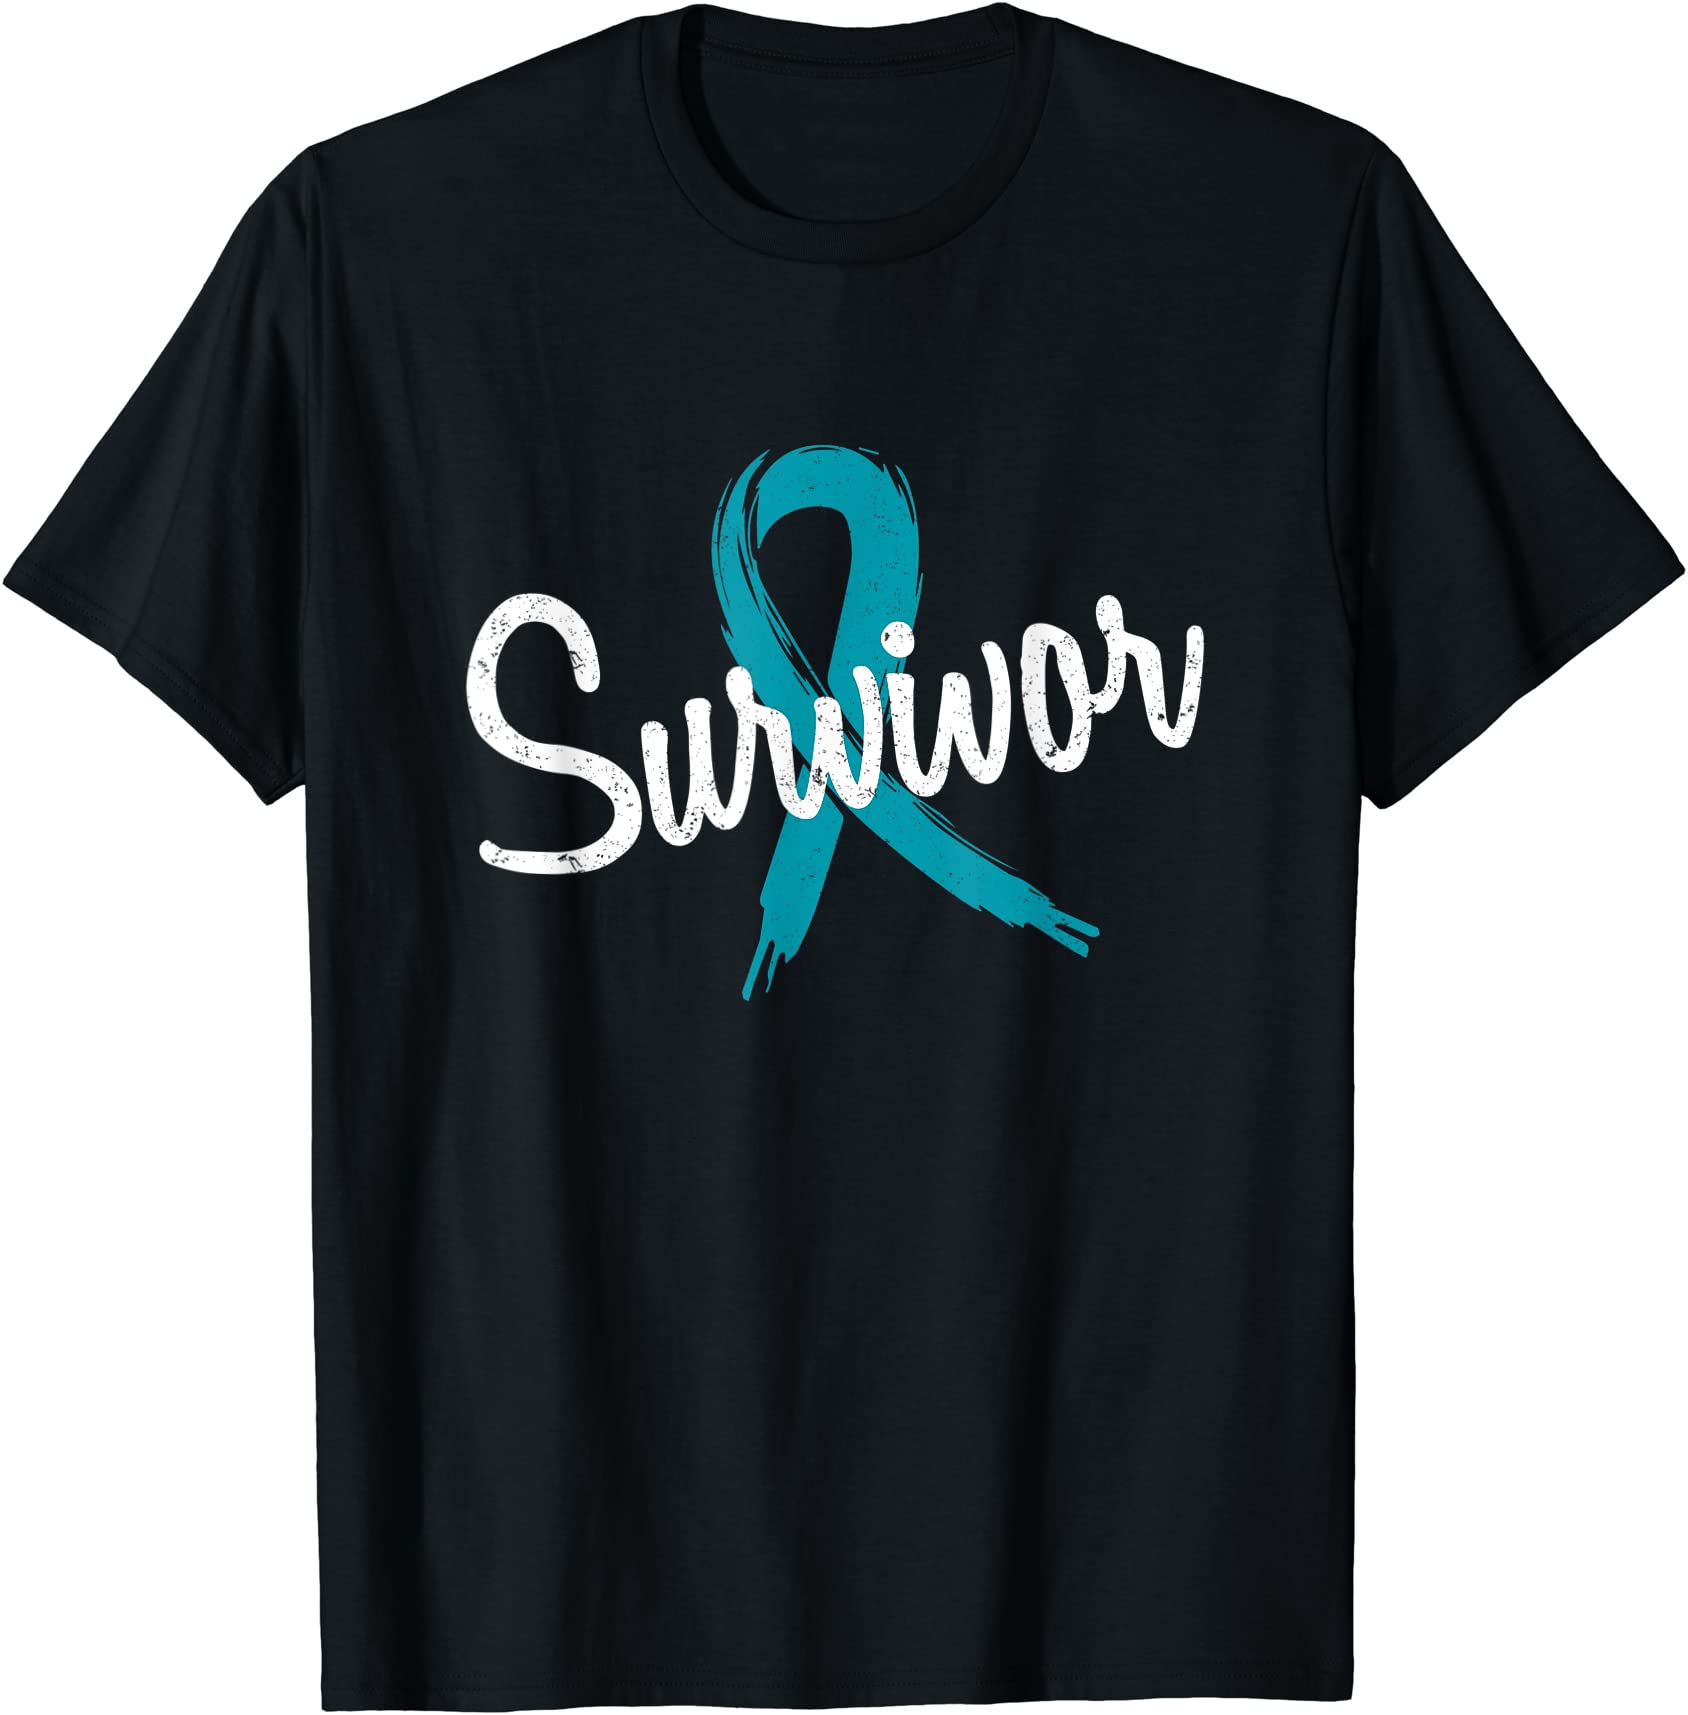 ovarian cancer survivor teal ribbon awareness gift t shirt men - Buy t ...